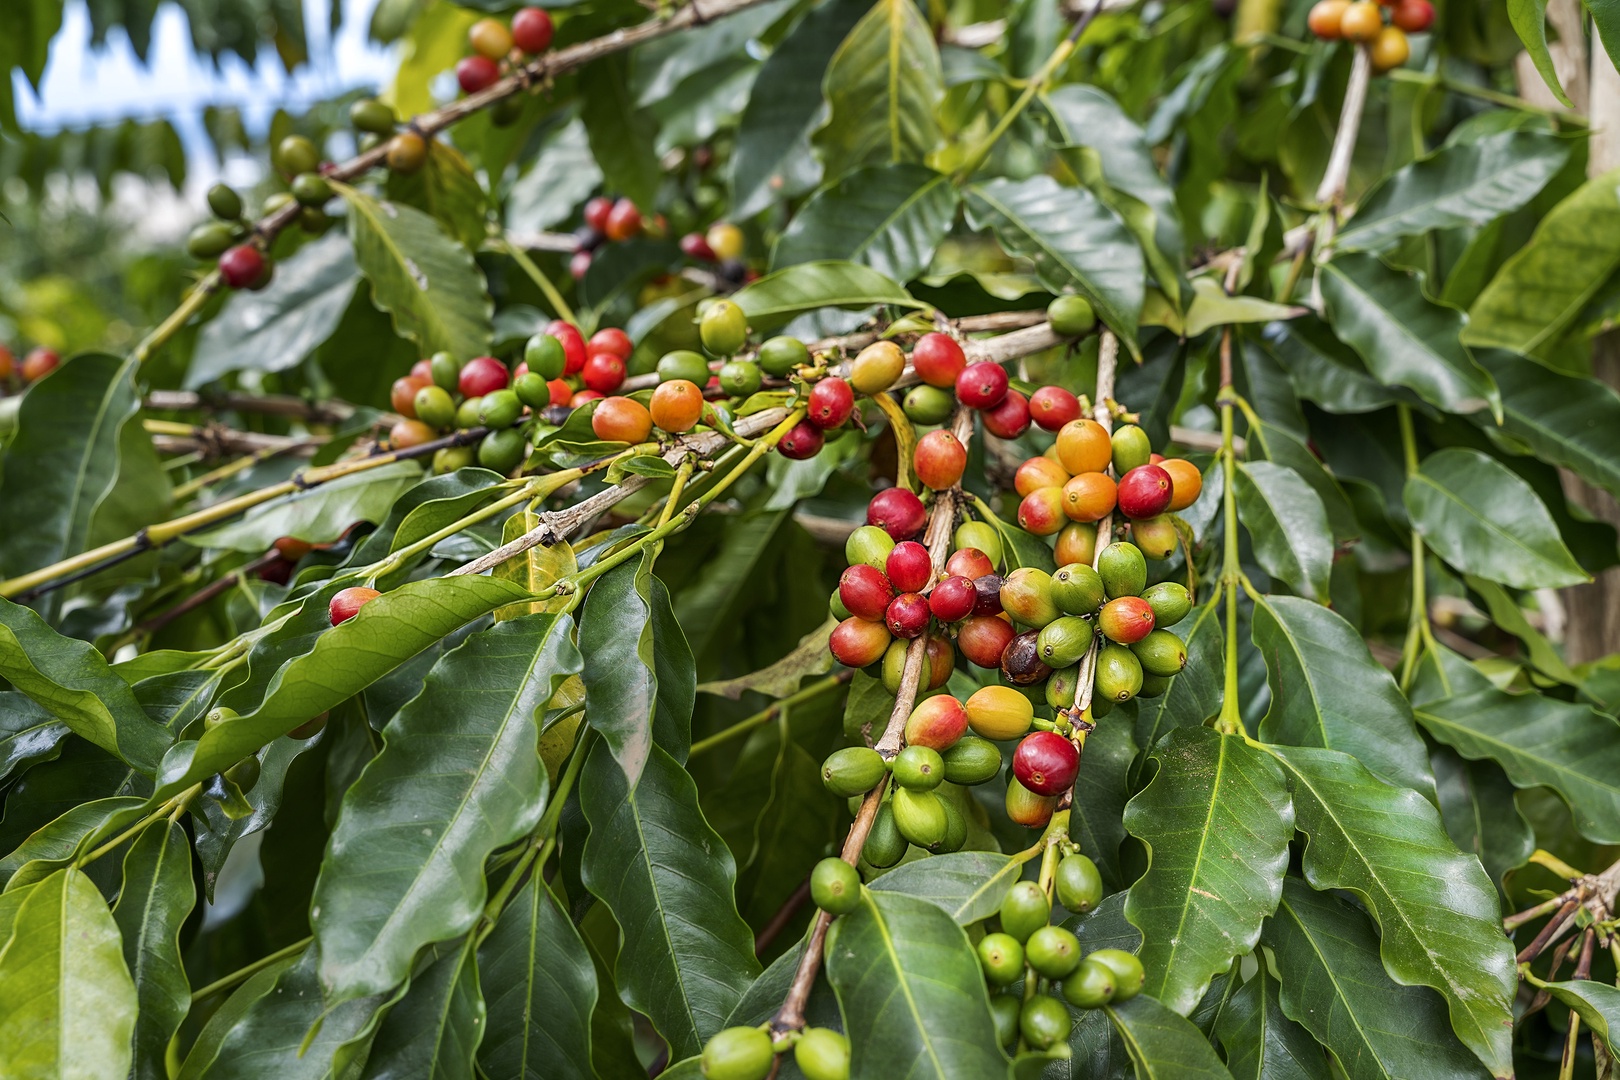 Kailua Kona Vacation Rentals, Piko Nani - Coffee trees on property!